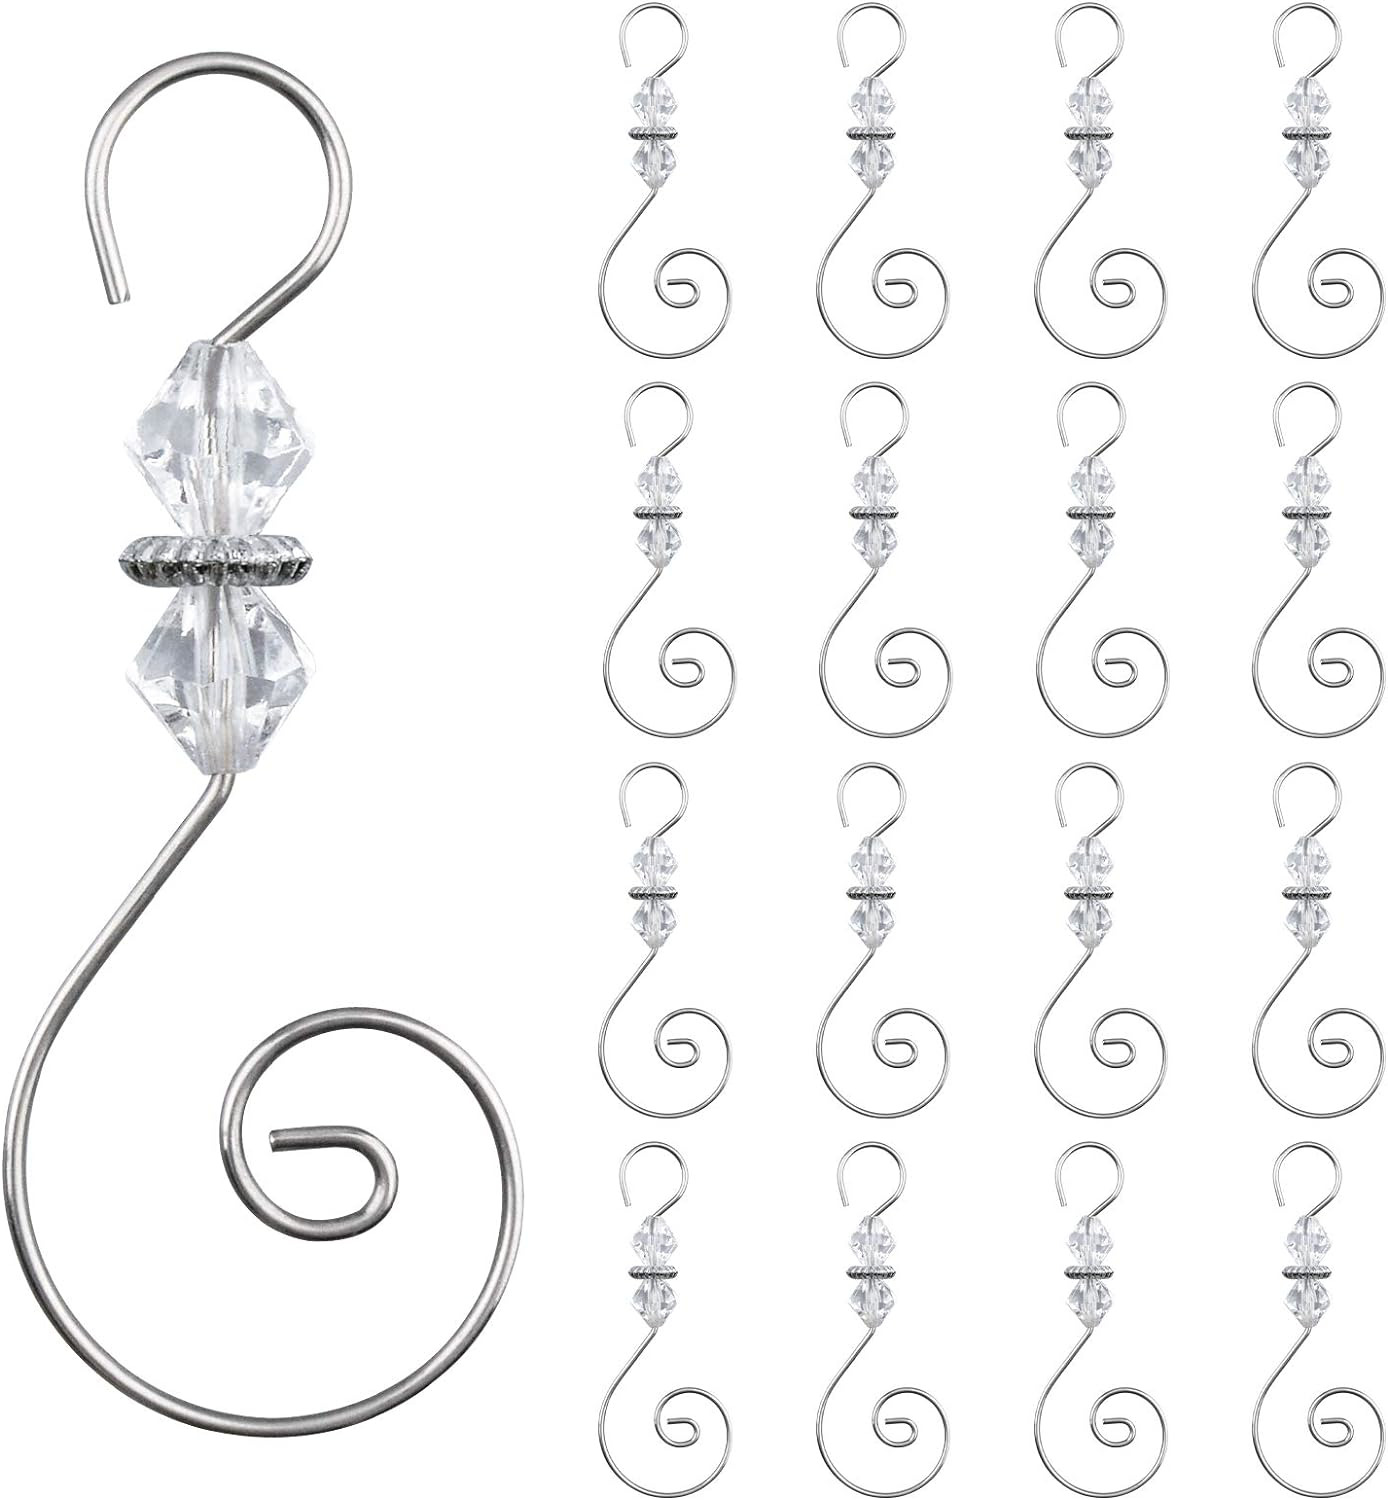 INCREWAY Ornament Hooks, 30 PCS Silver S-Shaped Hangers Hook Swirl Christmas